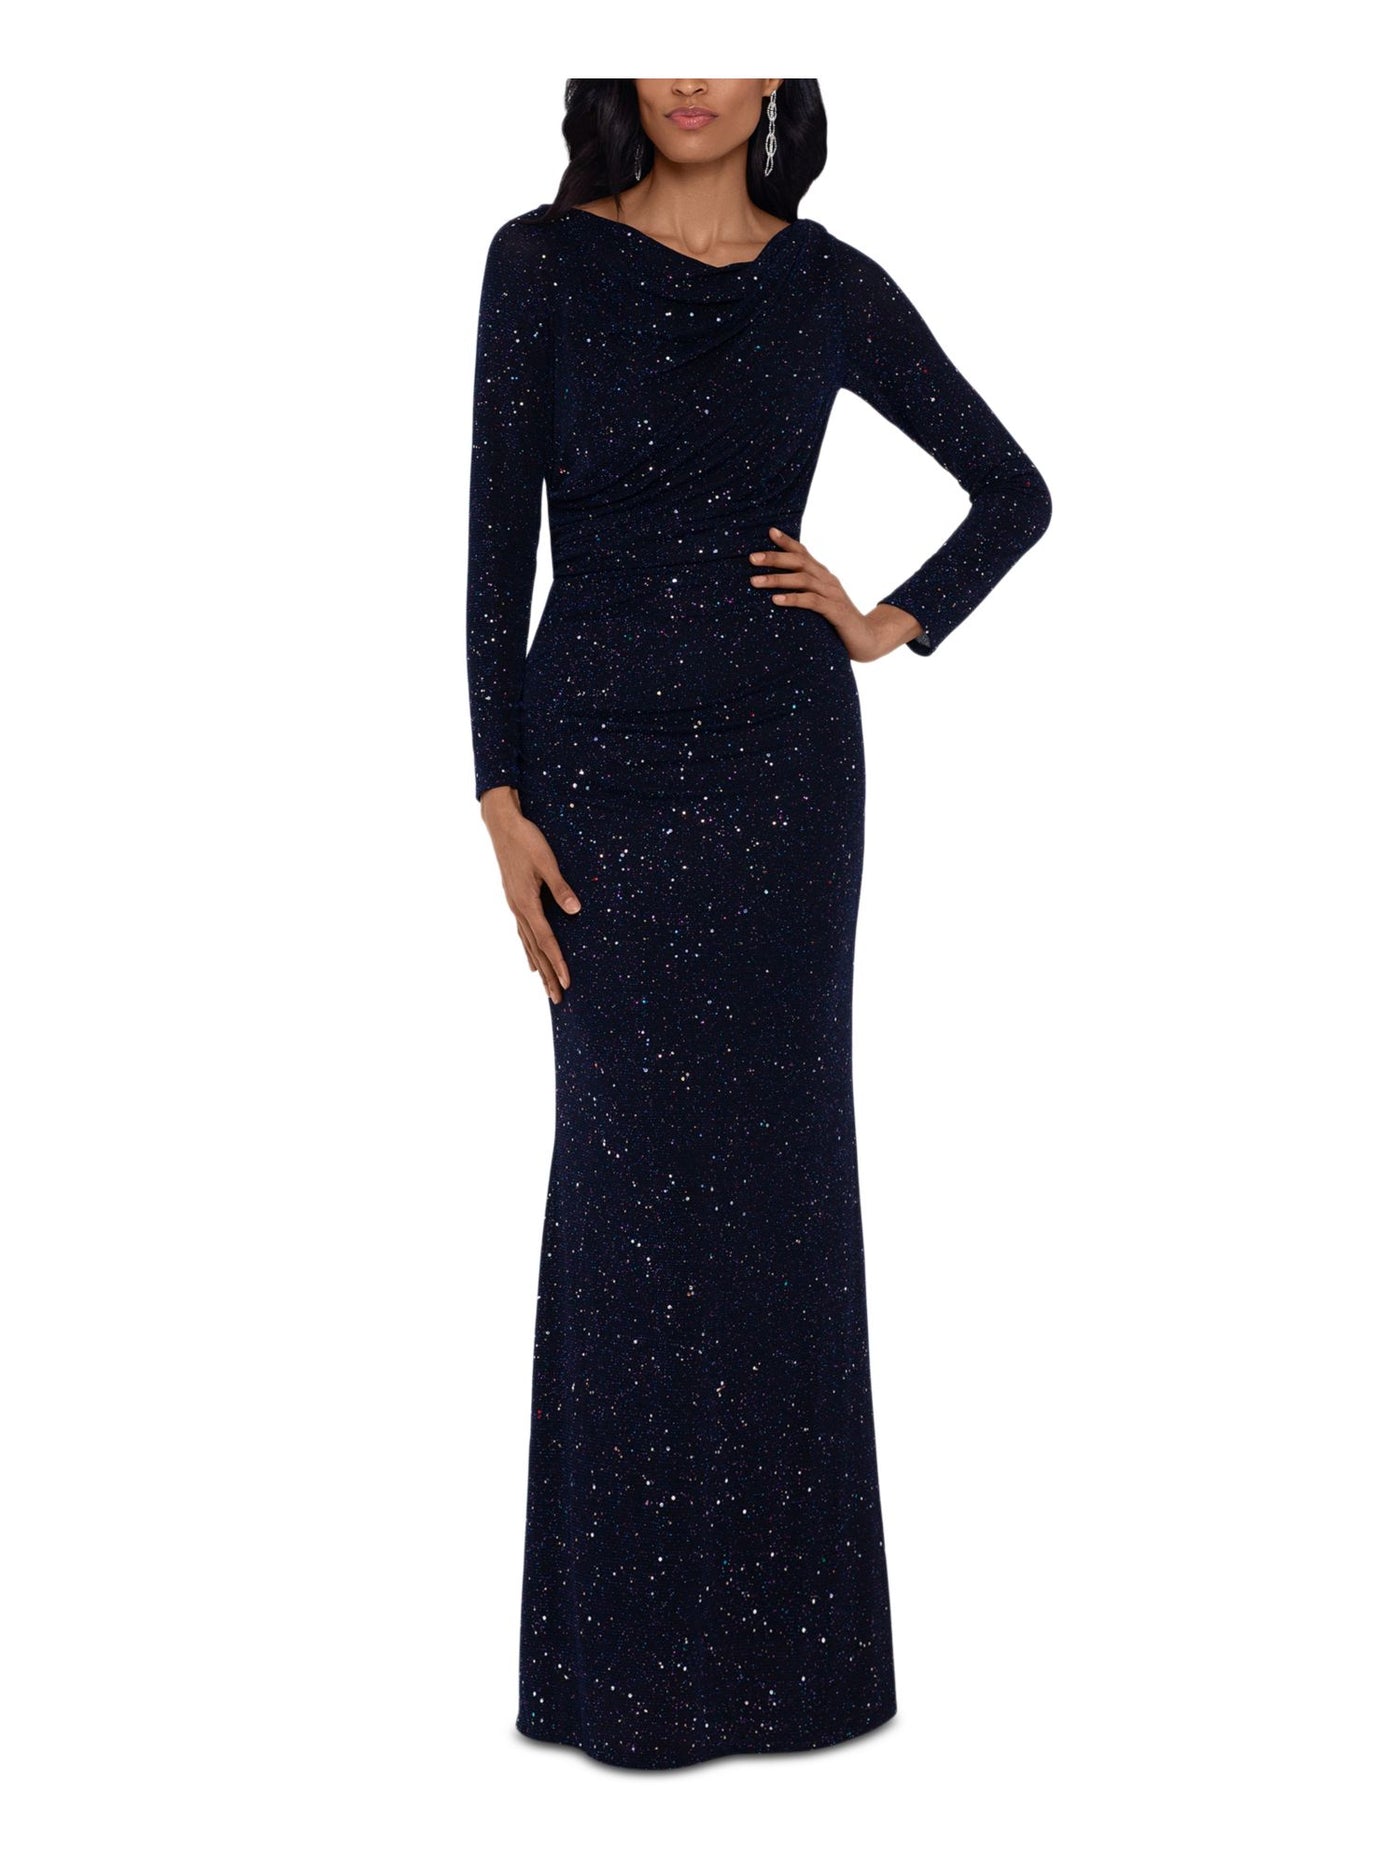 BETSY & ADAM Womens Navy Glitter Patterned Long Sleeve Jewel Neck Full-Length Evening Body Con Dress 4